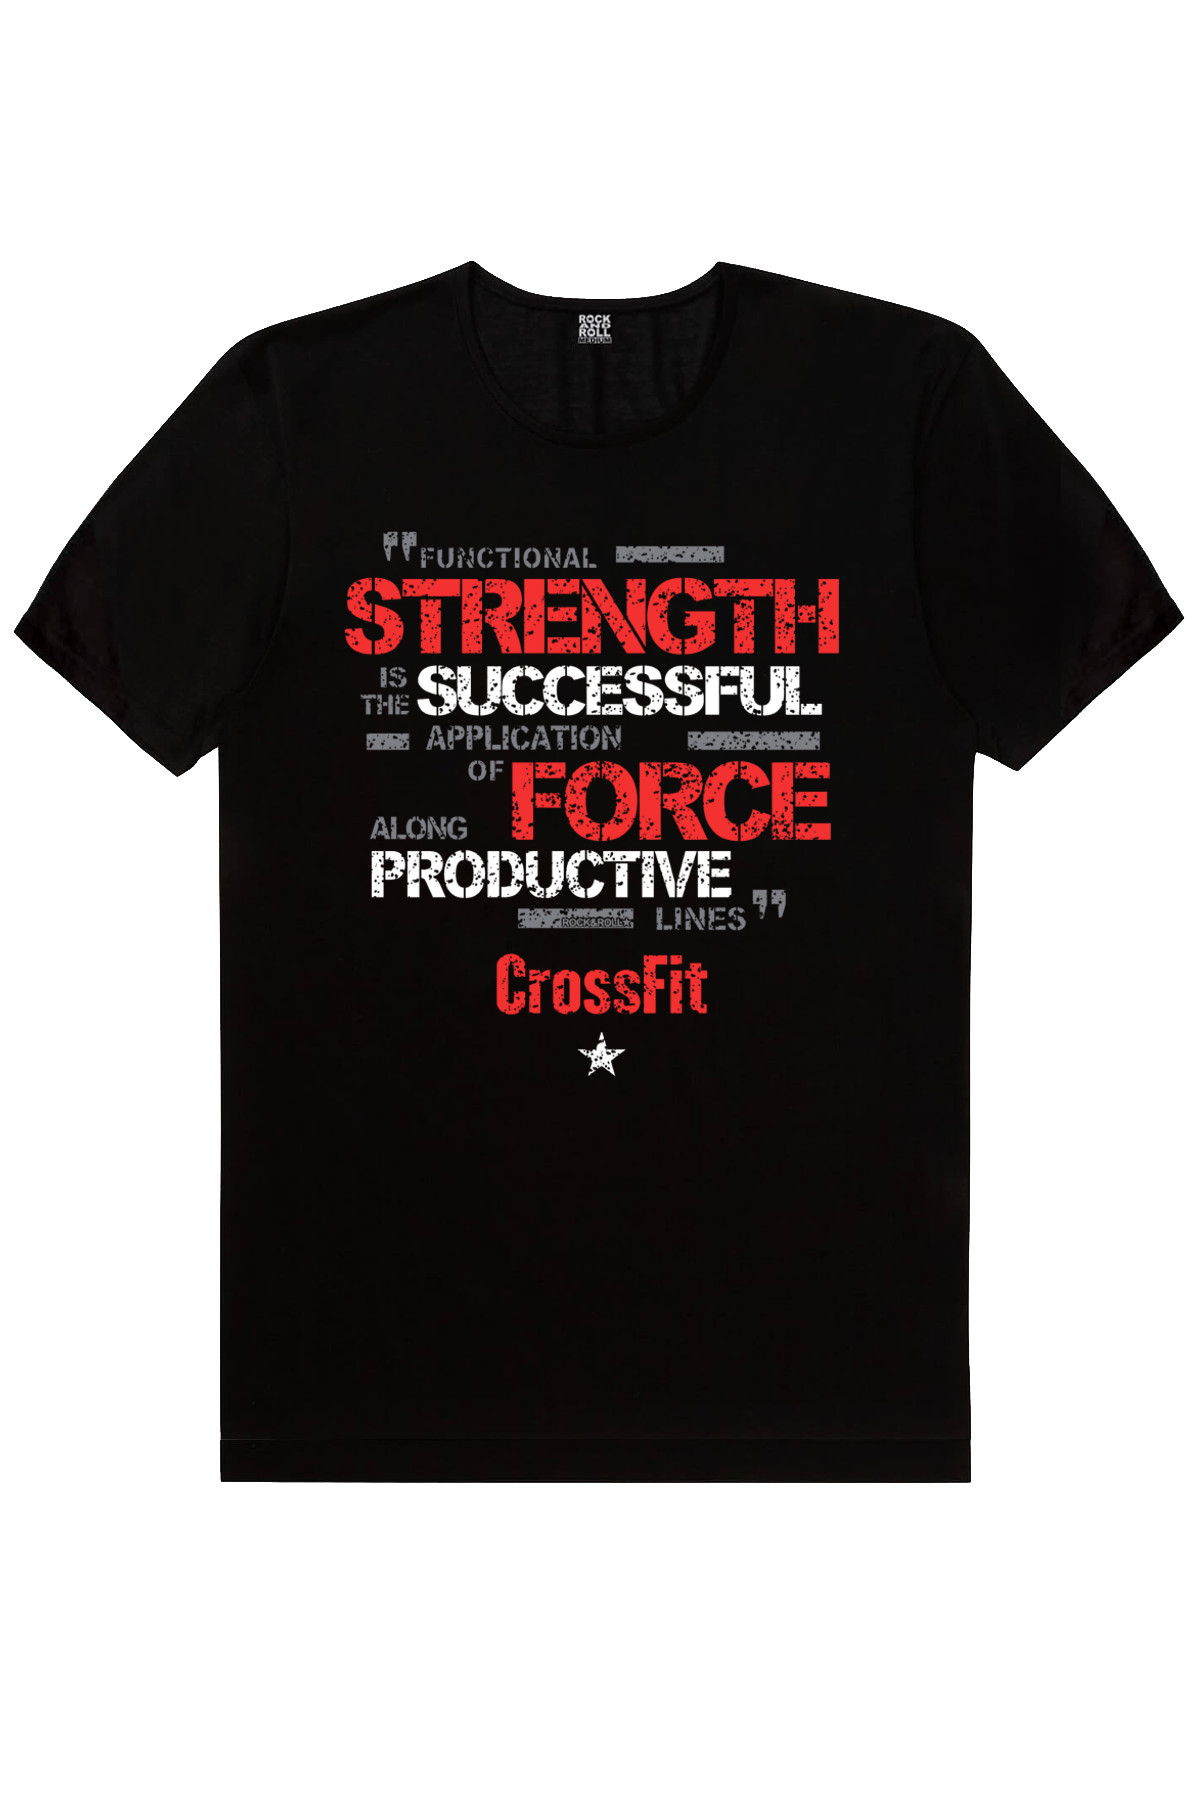 Güç Kuvvet Crossfit Siyah Kısa Kollu Erkek T-shirt